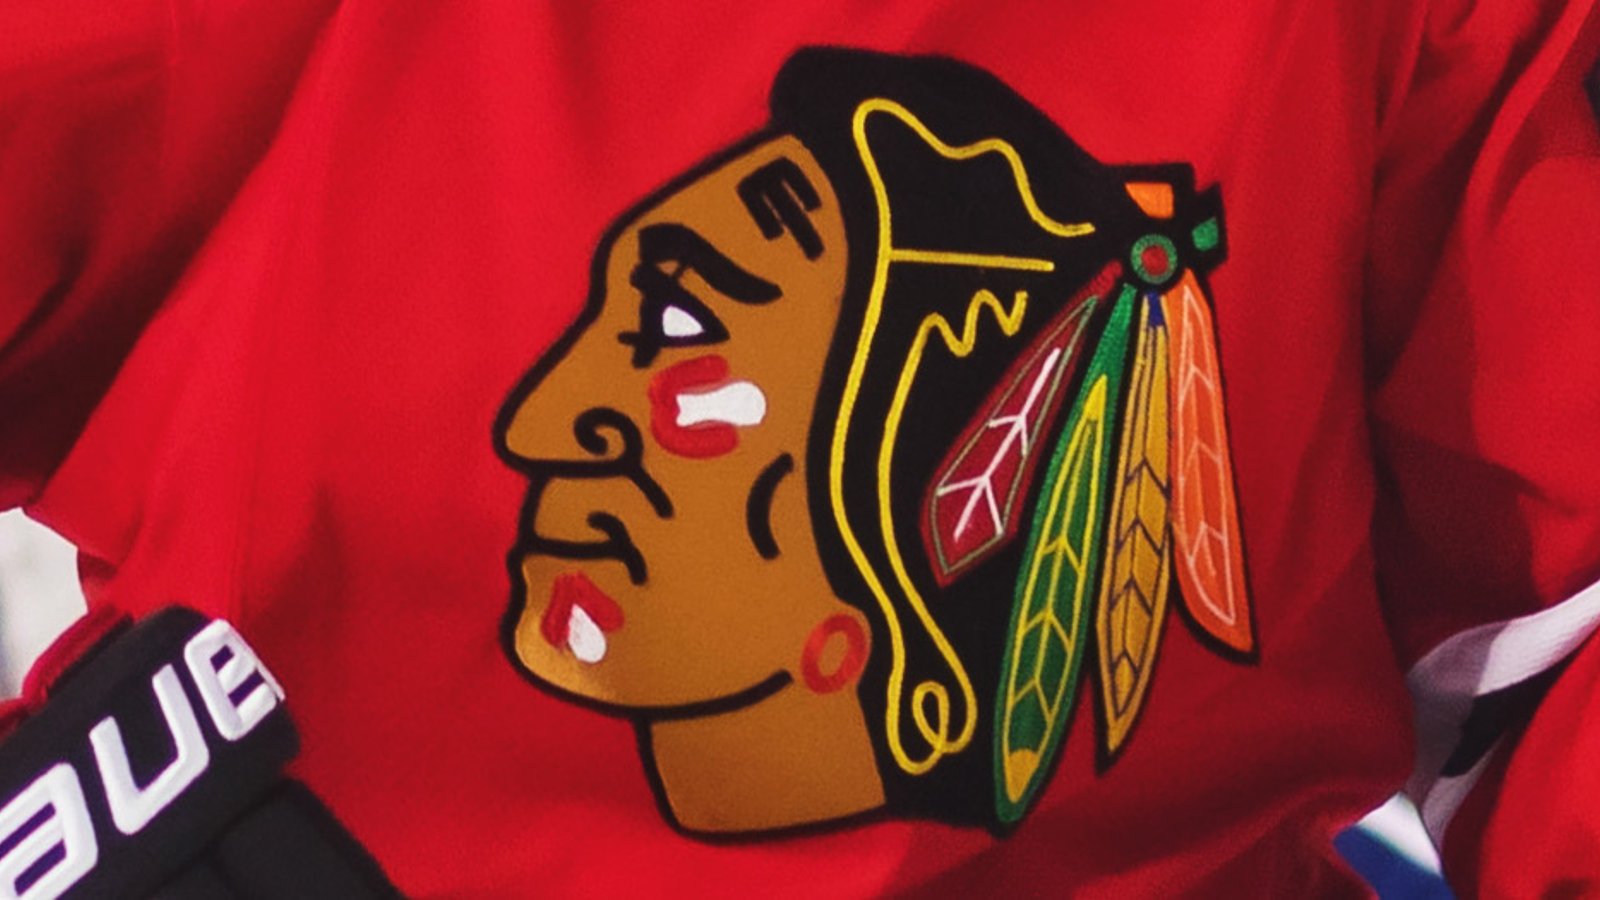 Controversy arises around the Chicago Blackhawks jersey at one prestigious University.